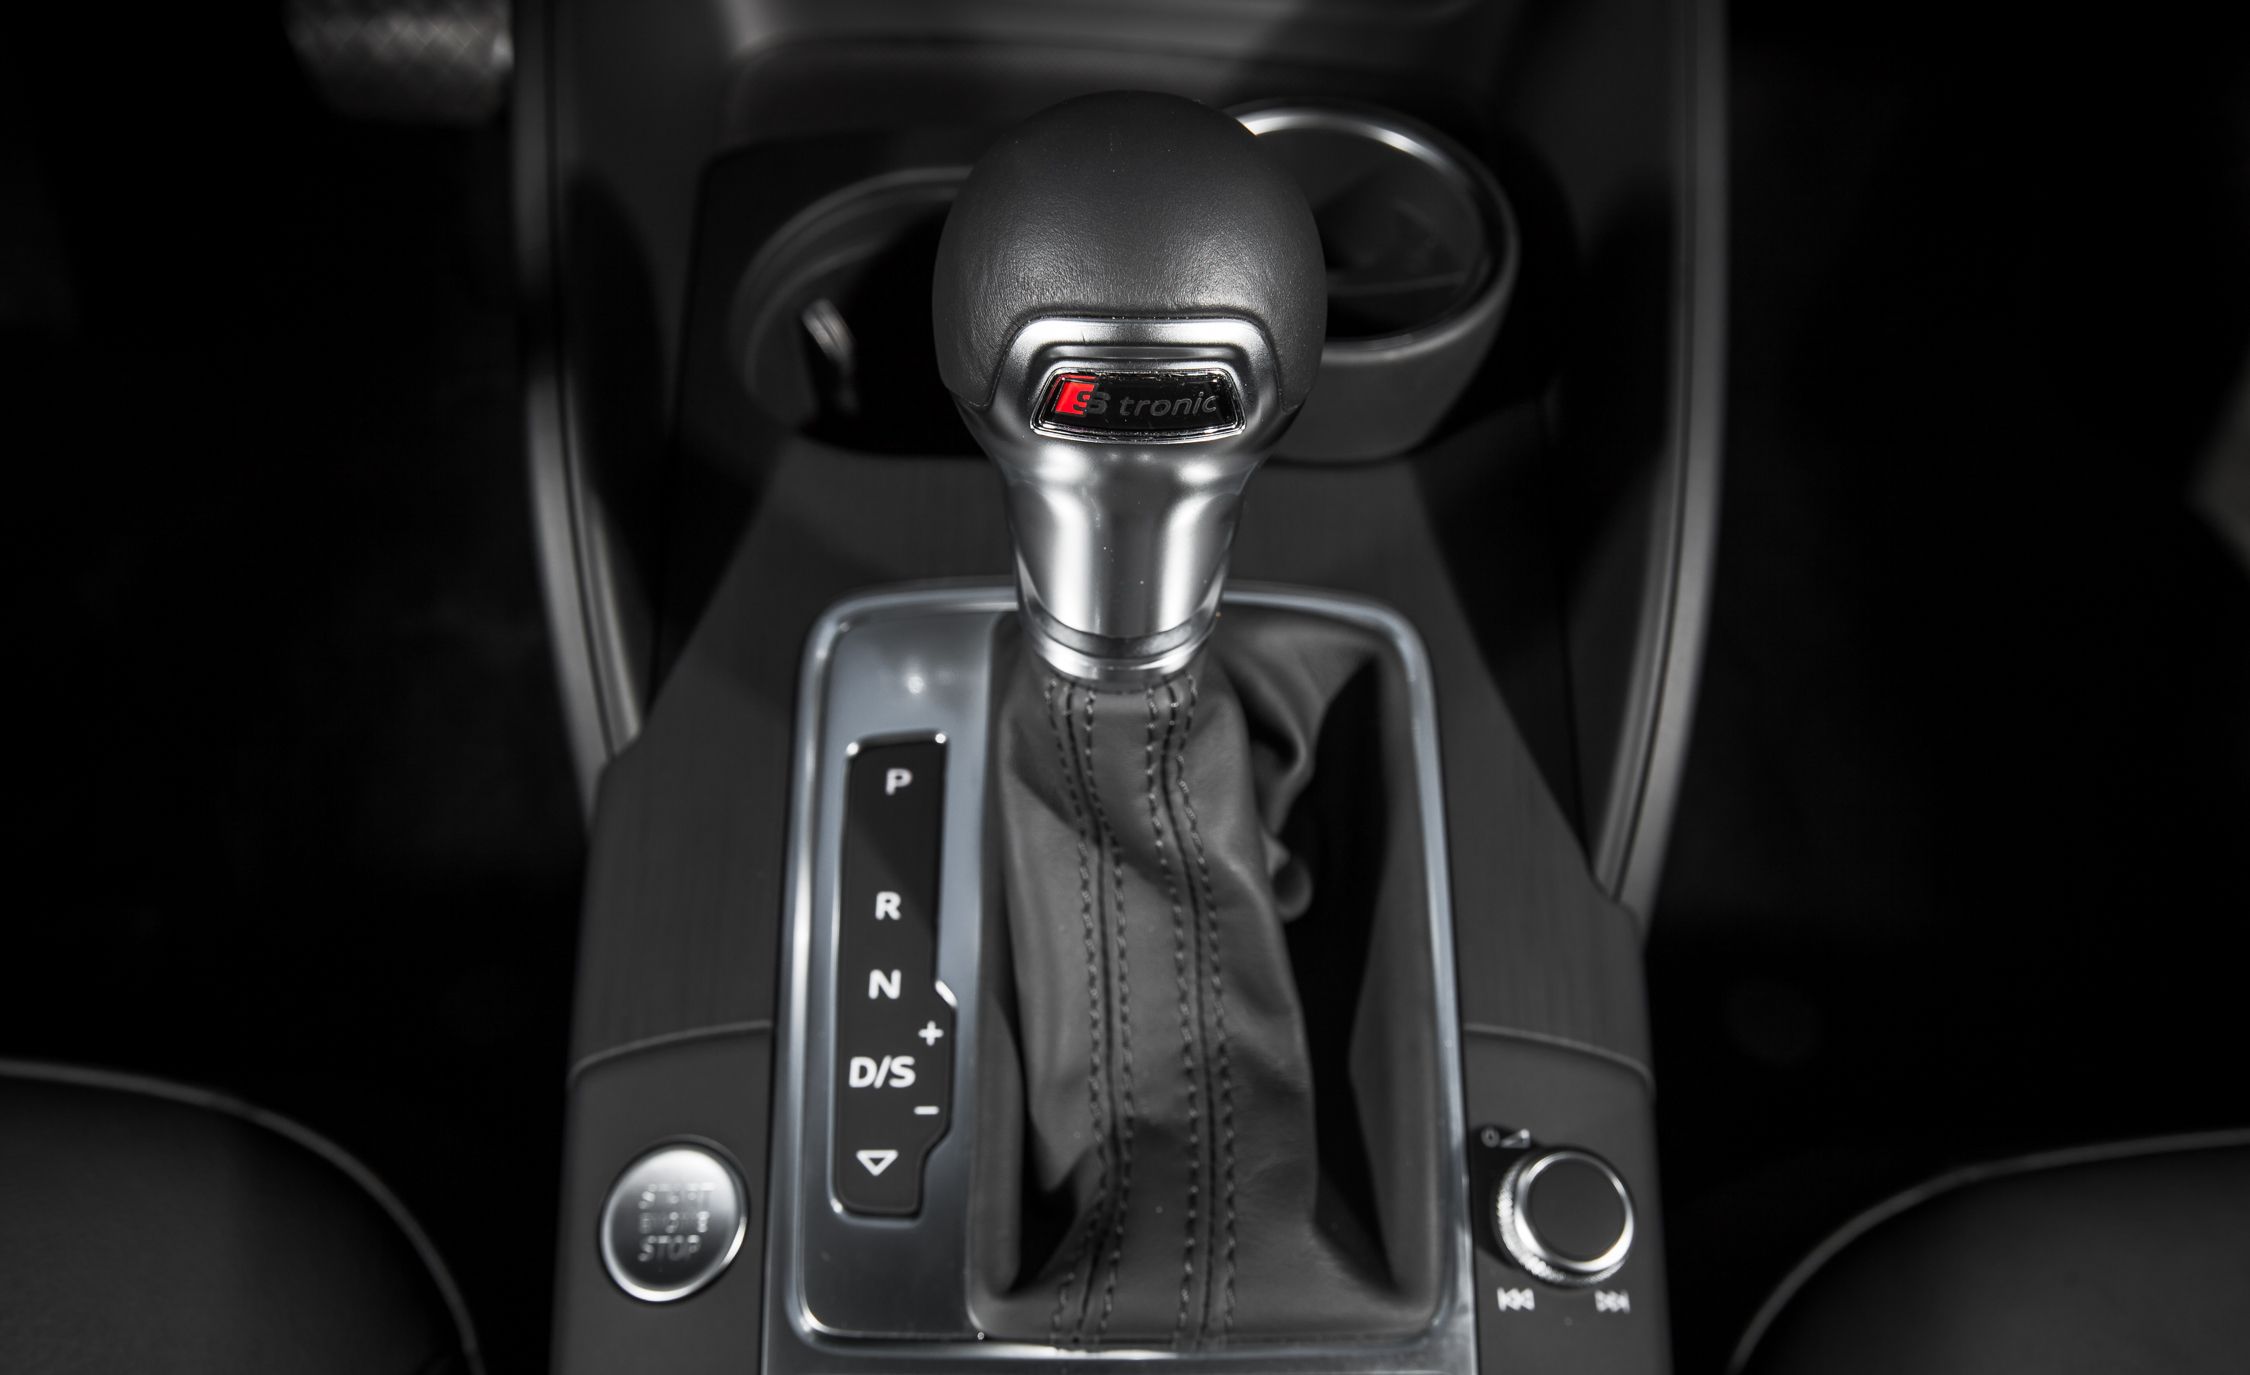 2015 Audi A3 TDI Interior View Gear Shift Knob (View 12 of 50)